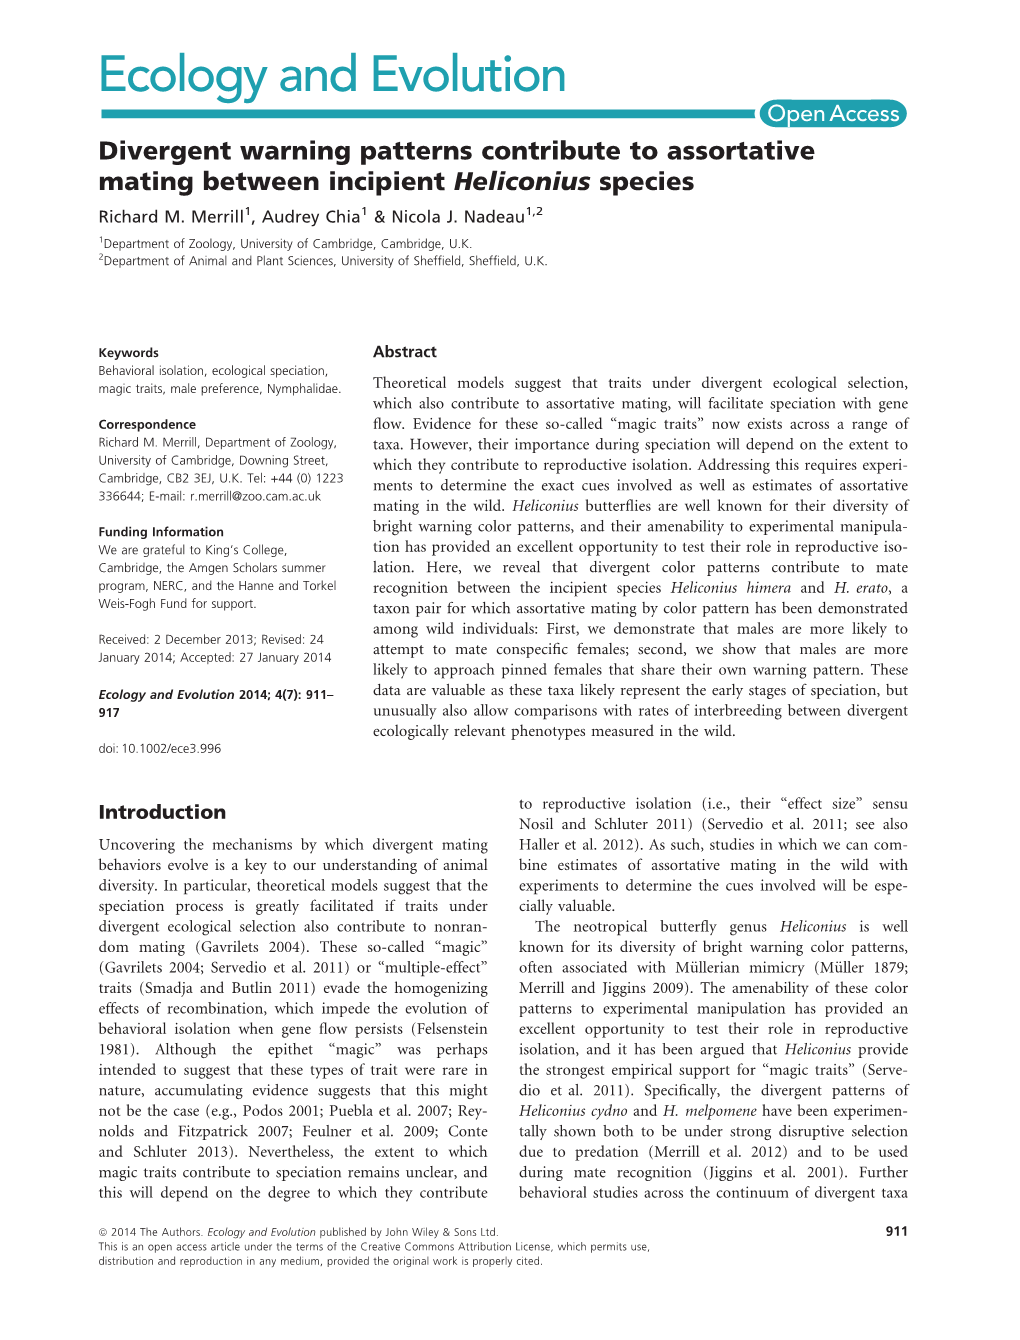 Divergent Warning Patterns Contribute to Assortative Mating Between Incipient Heliconius Species Richard M